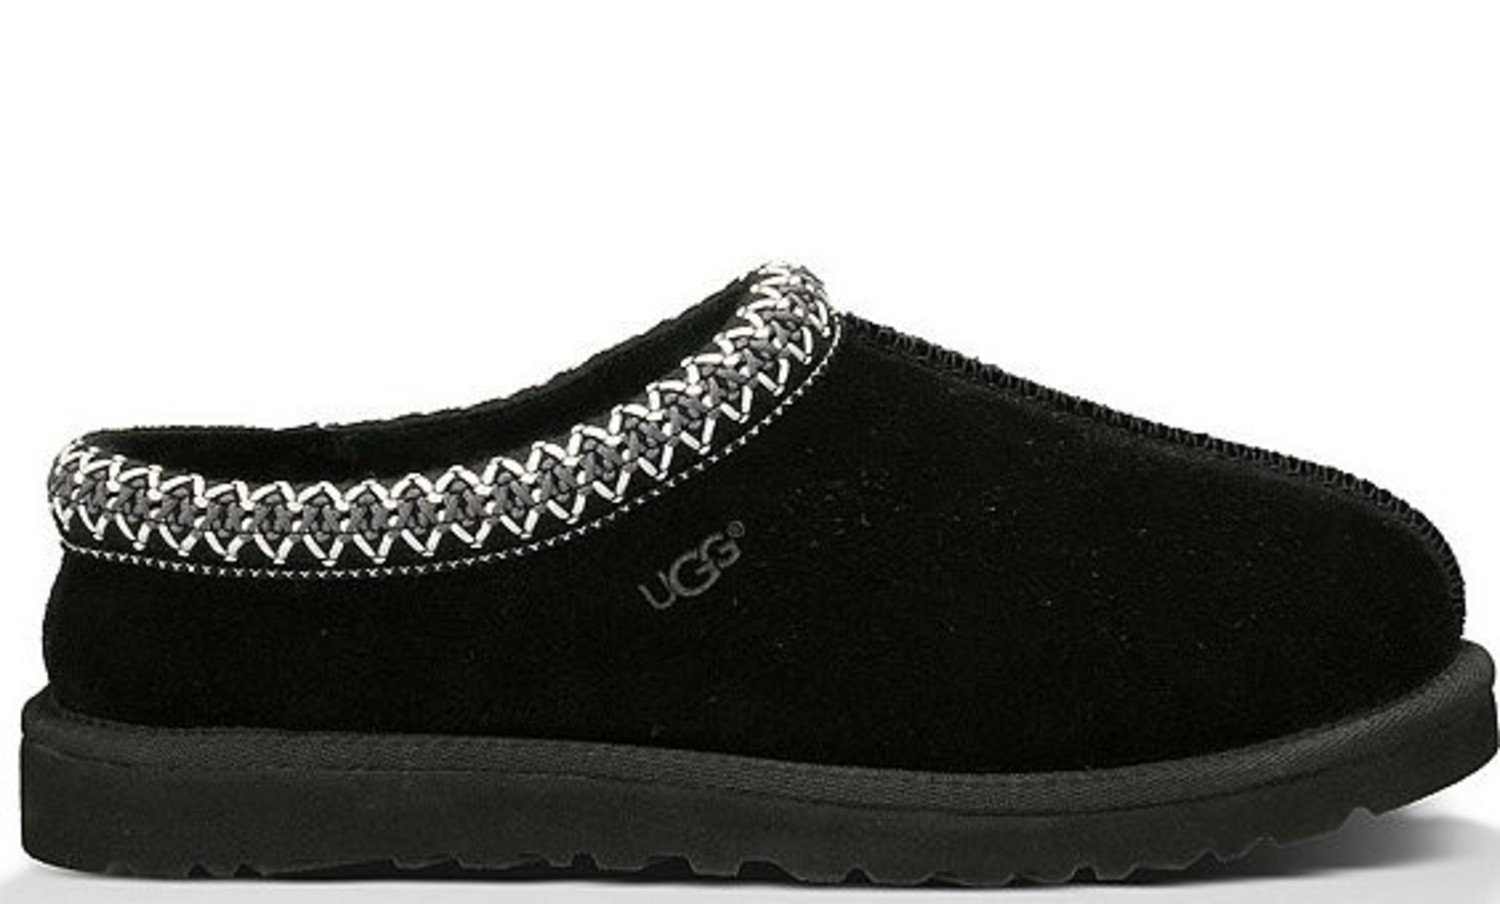 UGG Women's Tasman Black Suede Slipper - Continental Shoes